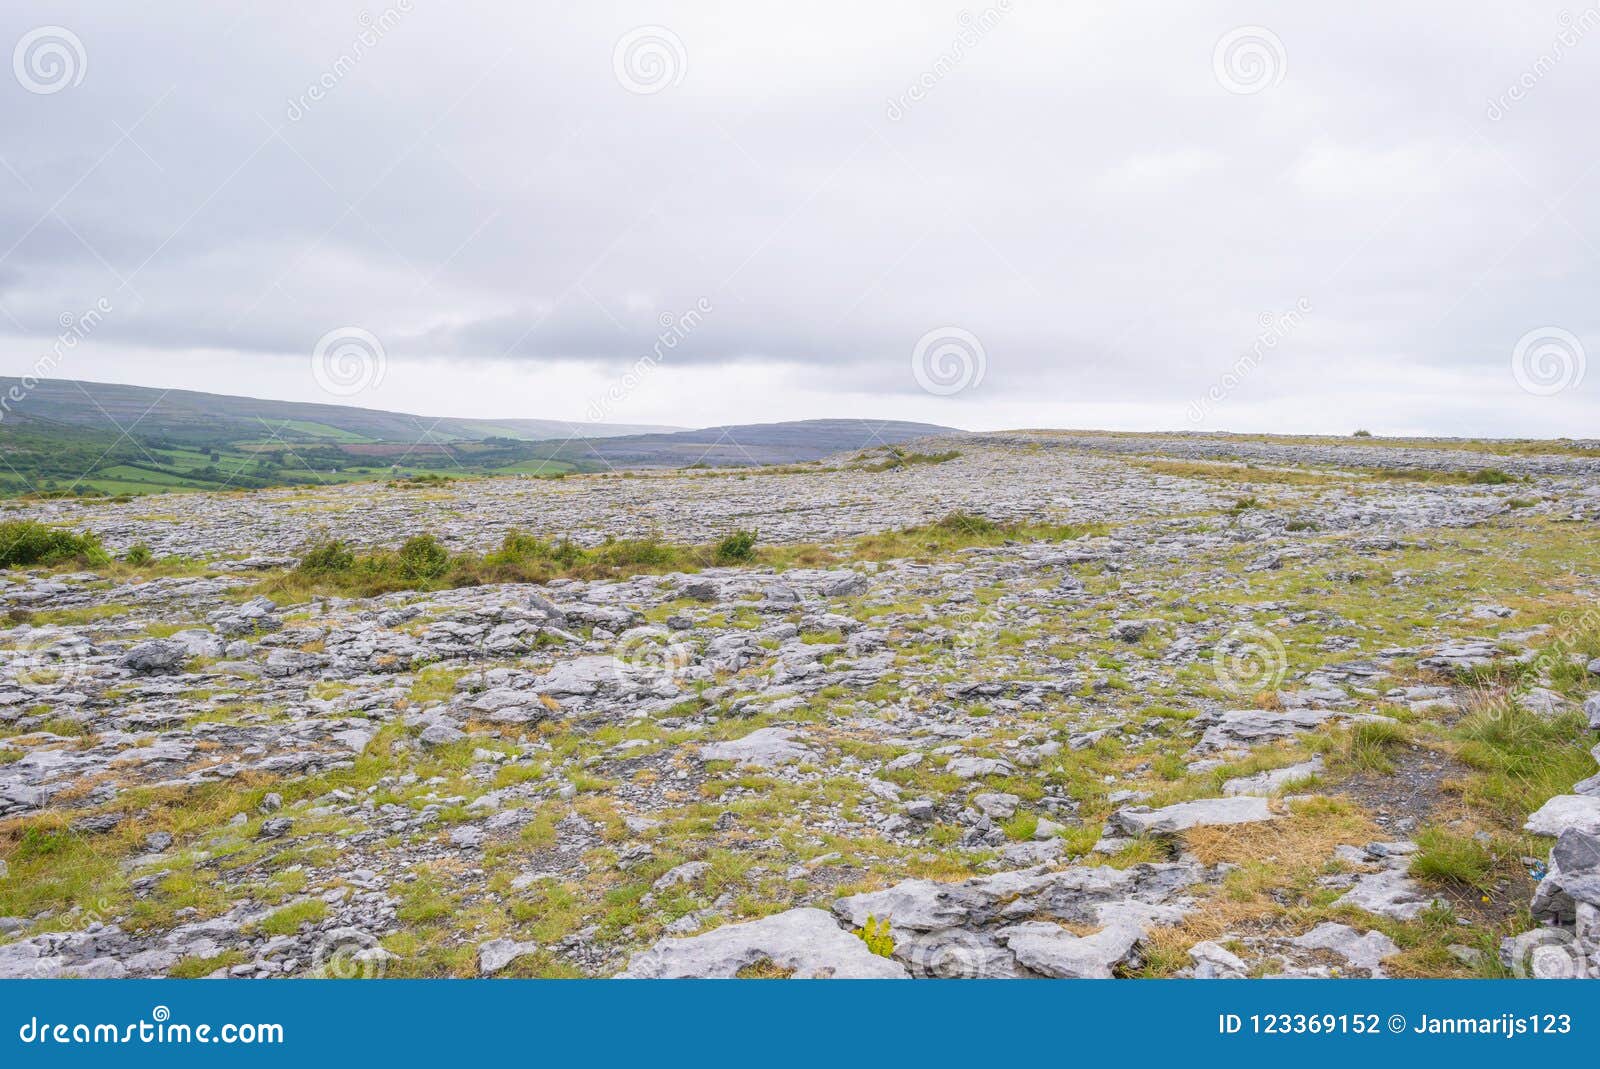 The Karst Landscape of National Park the Burren in Ireland Stock Photo ...